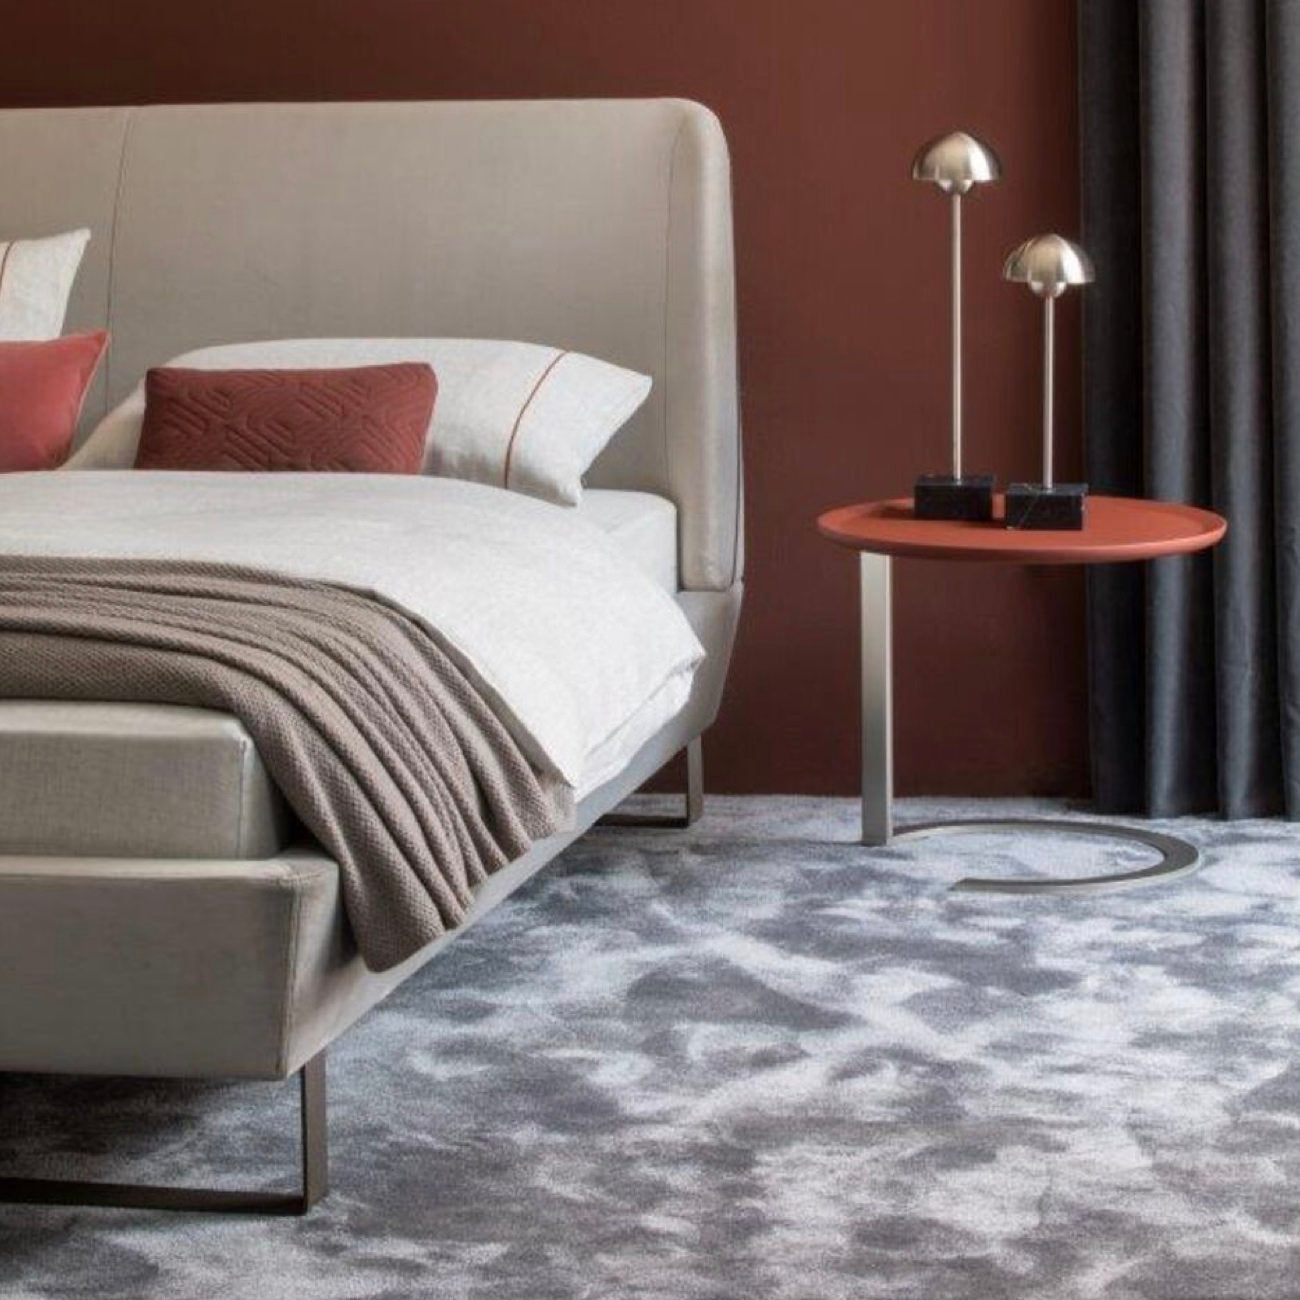 LALUNE bed by Christine Kröncke Interior Design